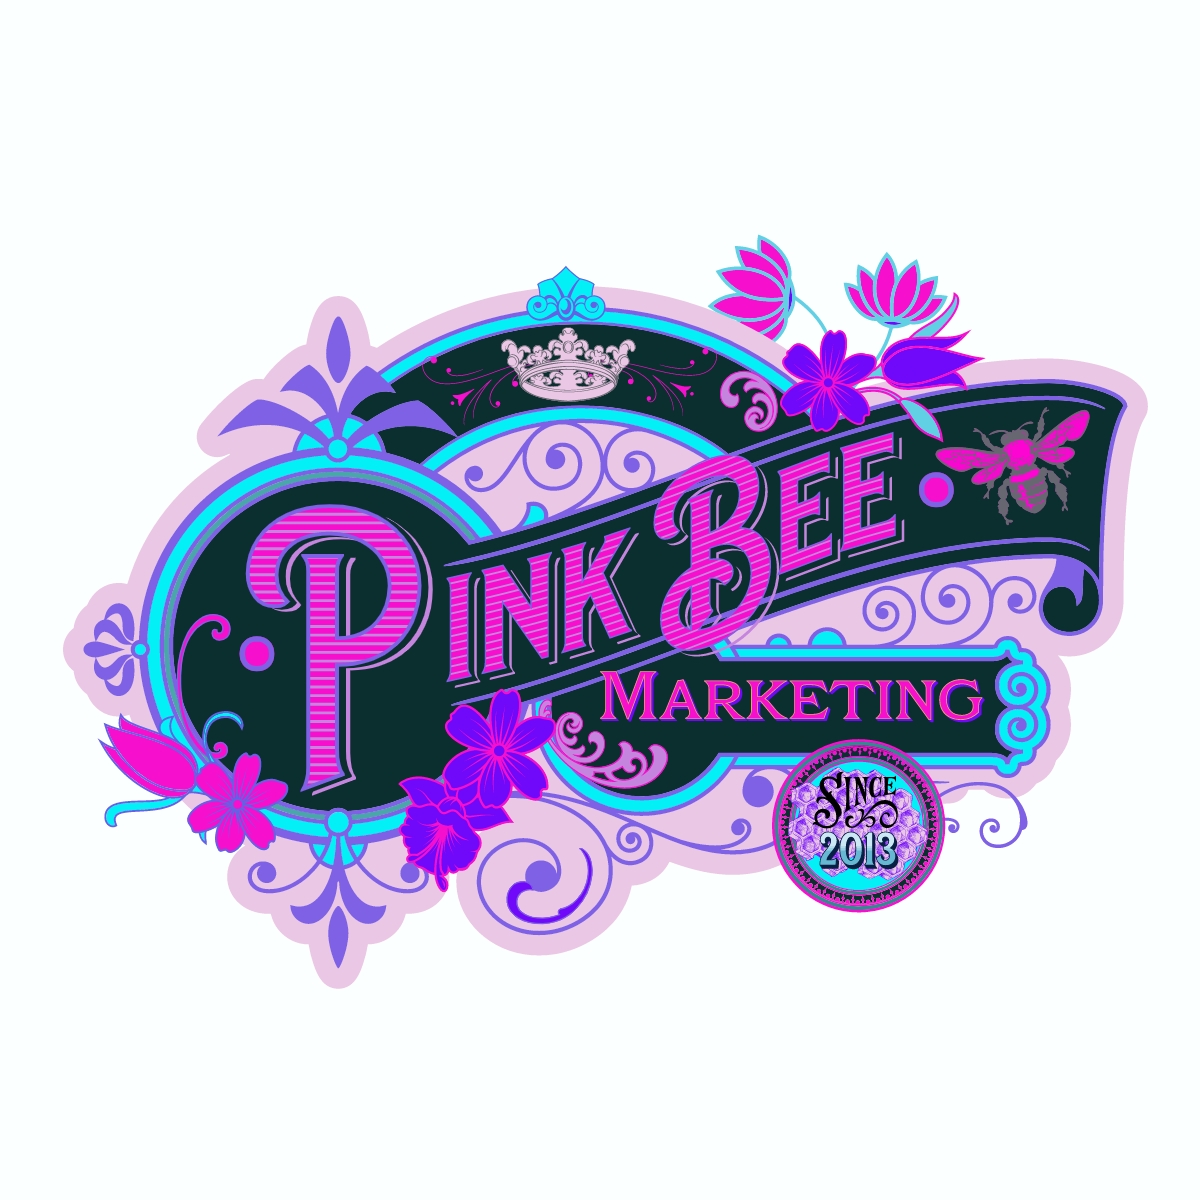 Pink Bee Marketing